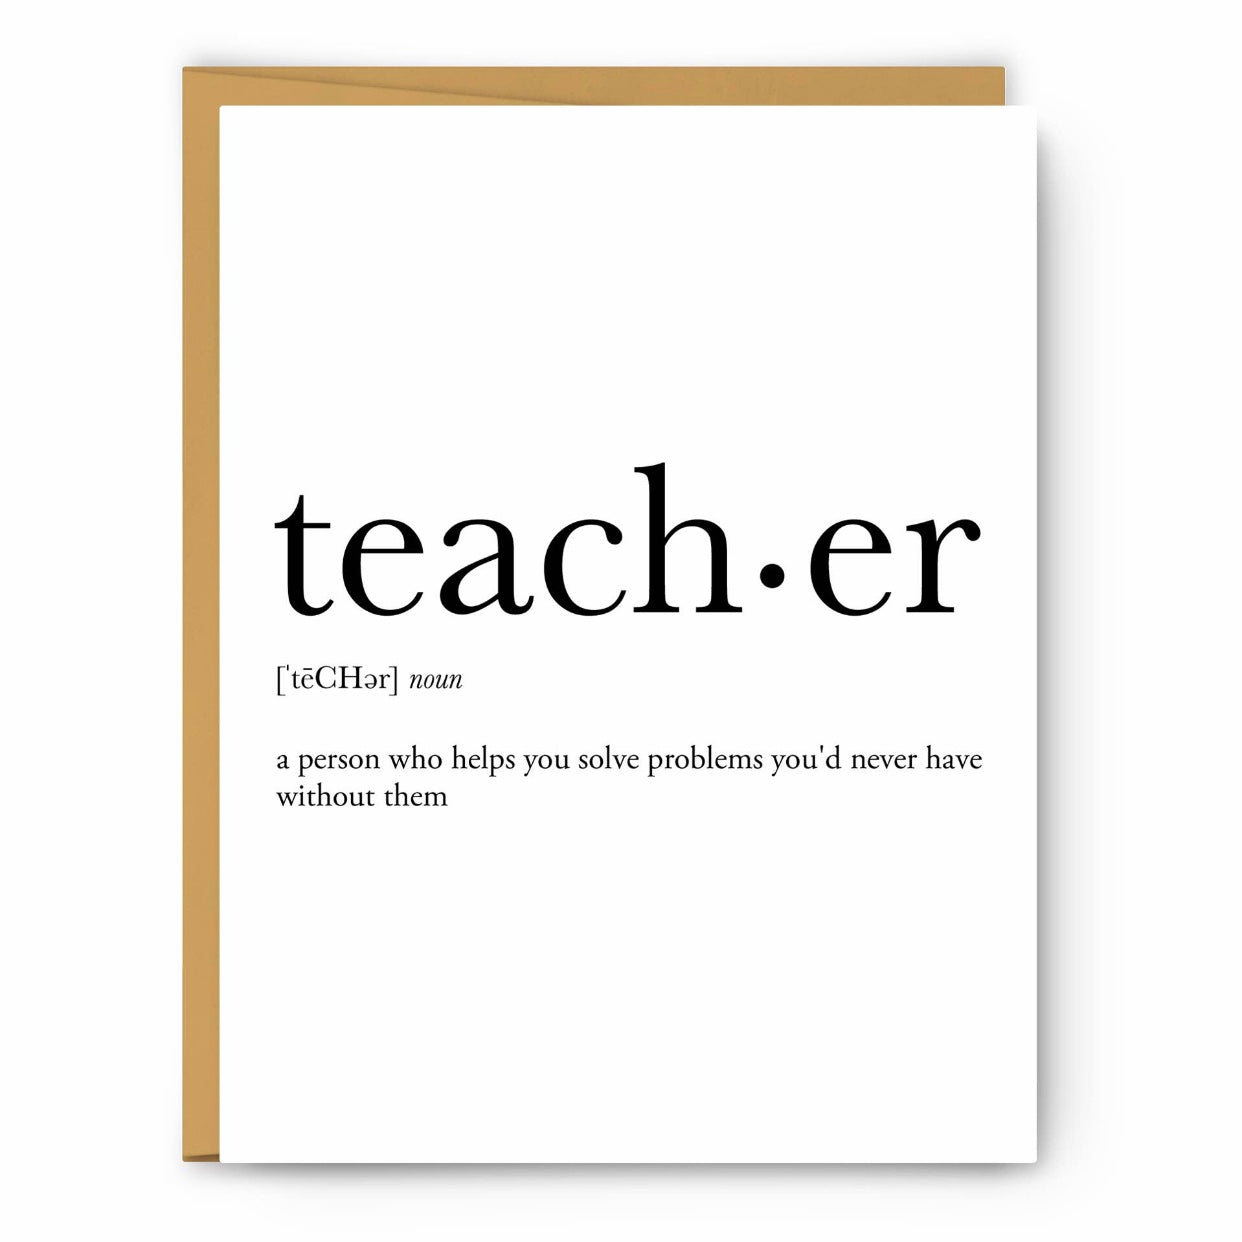 teacher noun greeting card